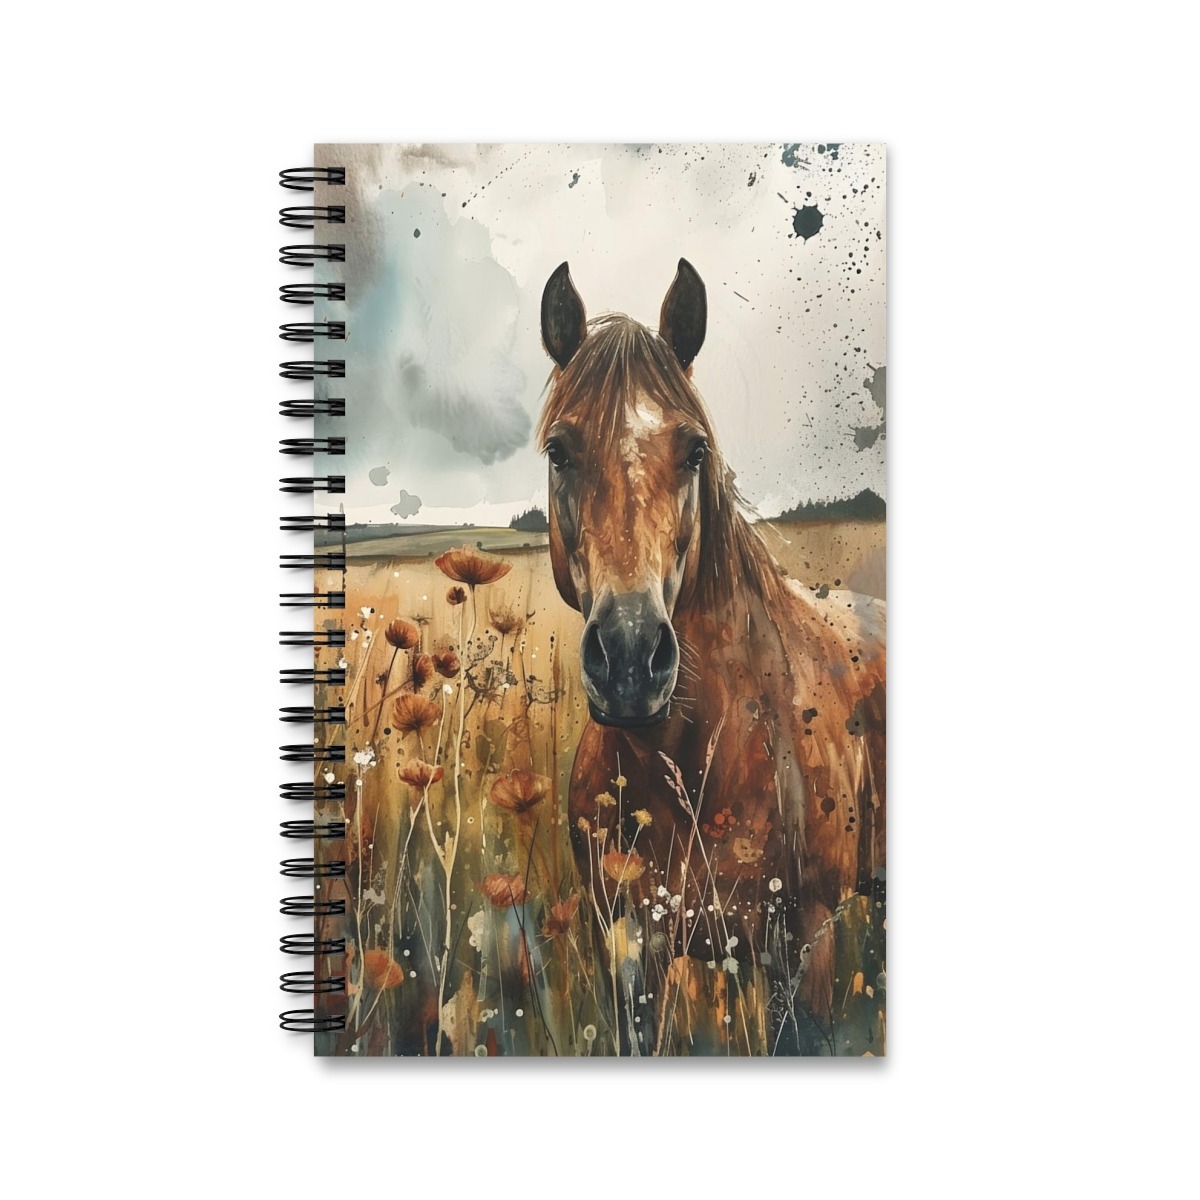 Aquarell Pferde Notizbuch - Ringbindung, verschiedene Stile verfügbar